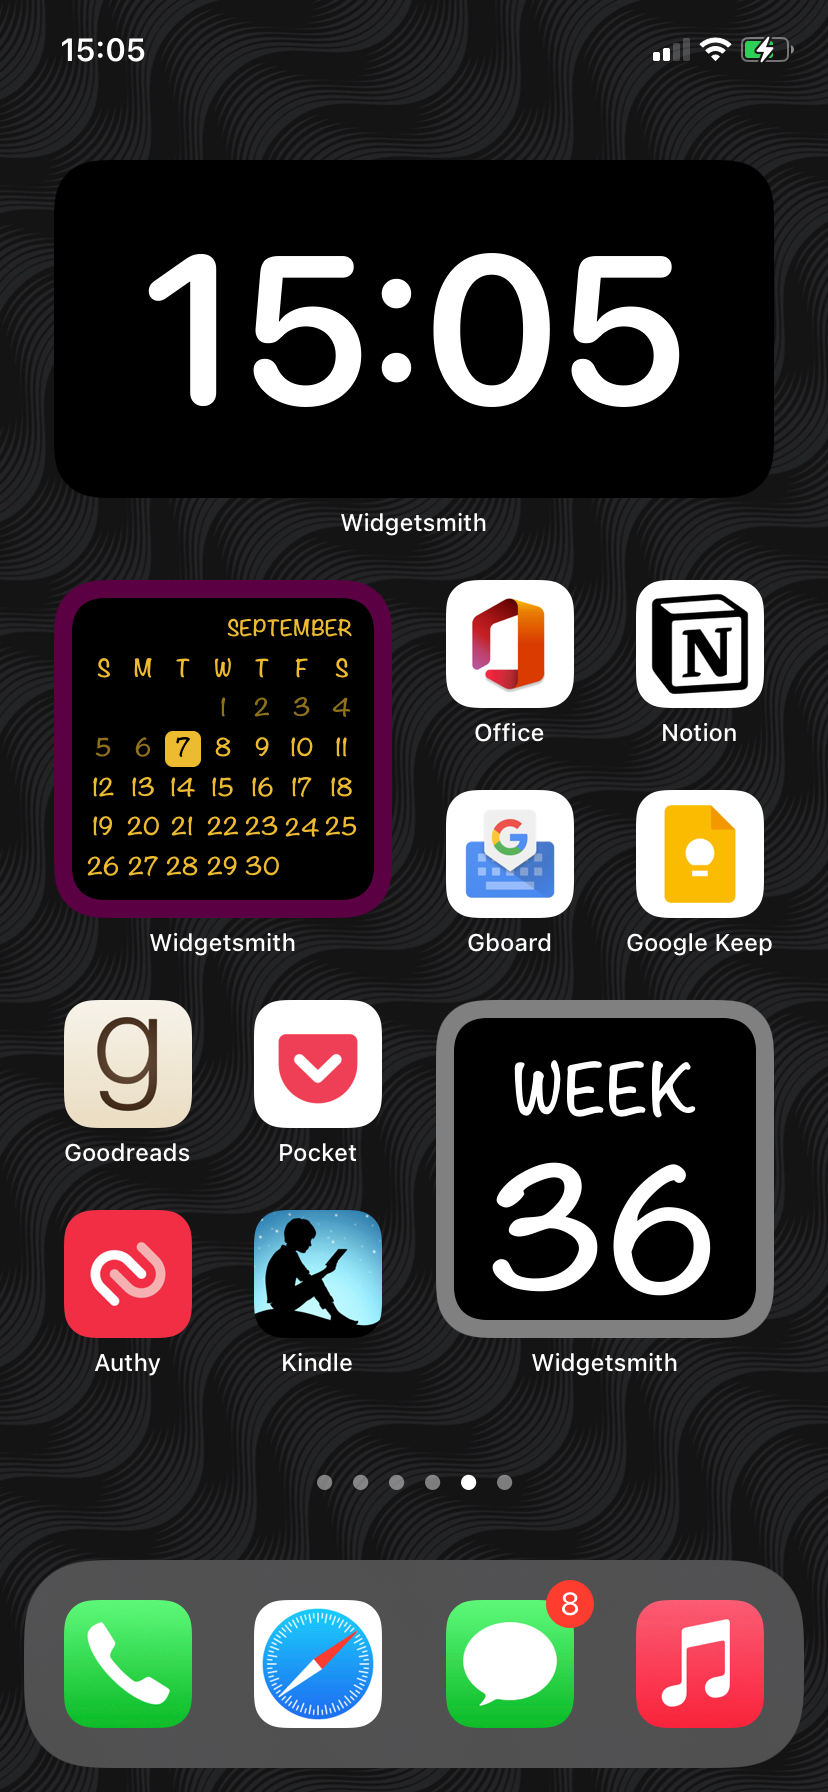 iOS Home screen with custom widgets